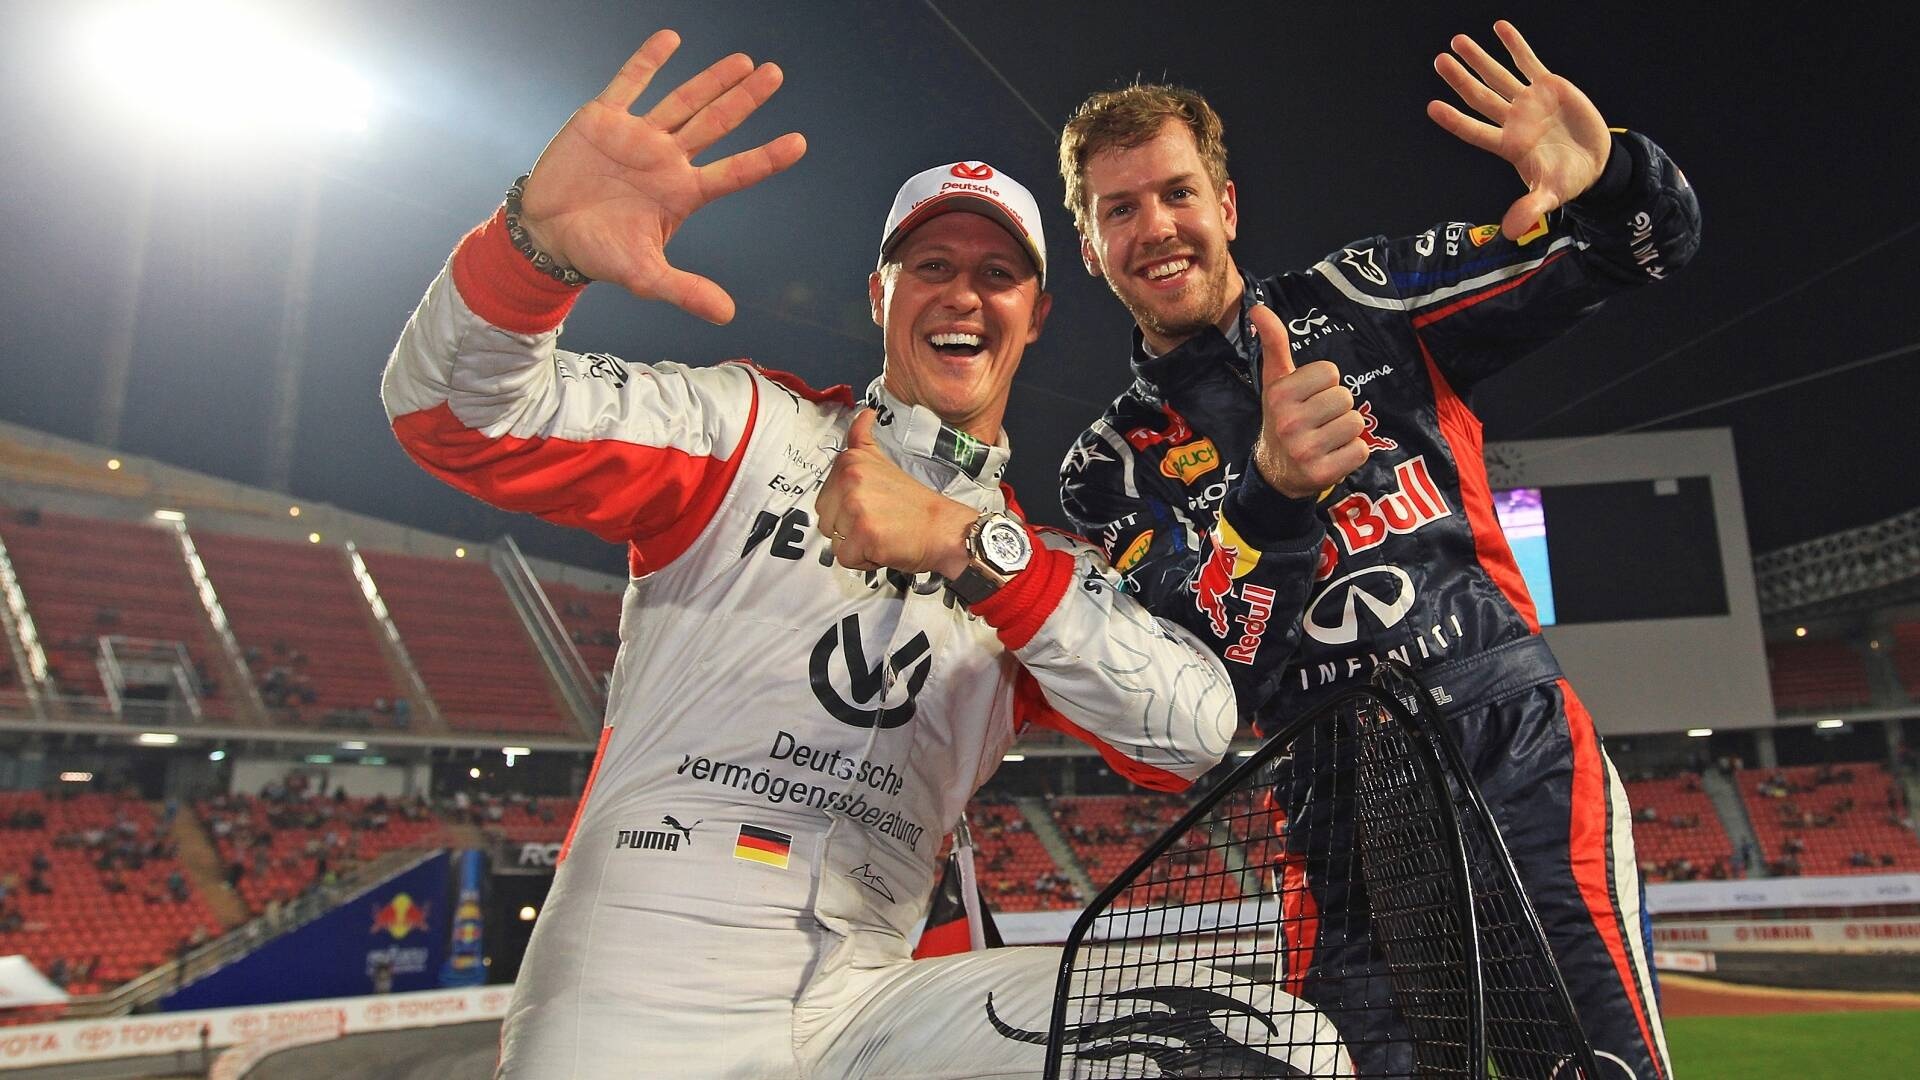 Race of Champions (ROC): Sebastian Vettel and Michael Schumacher compilation, Team Germany, ROC Nations cup winners. 1920x1080 Full HD Wallpaper.